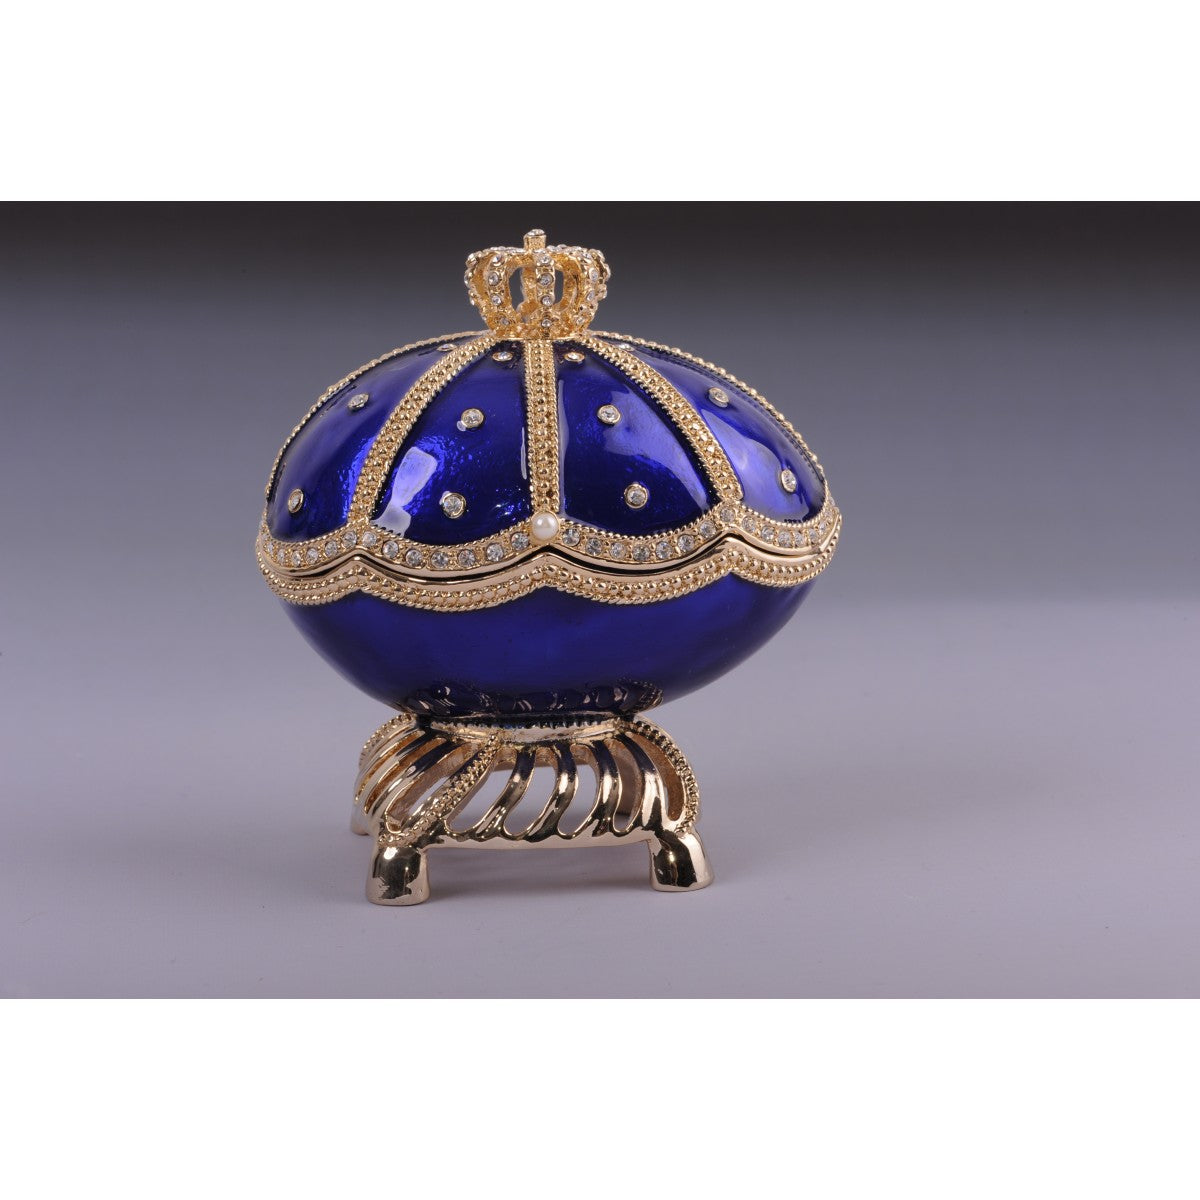 Faberge style Trinket Box by Keren Kopal Swarovski Crystal